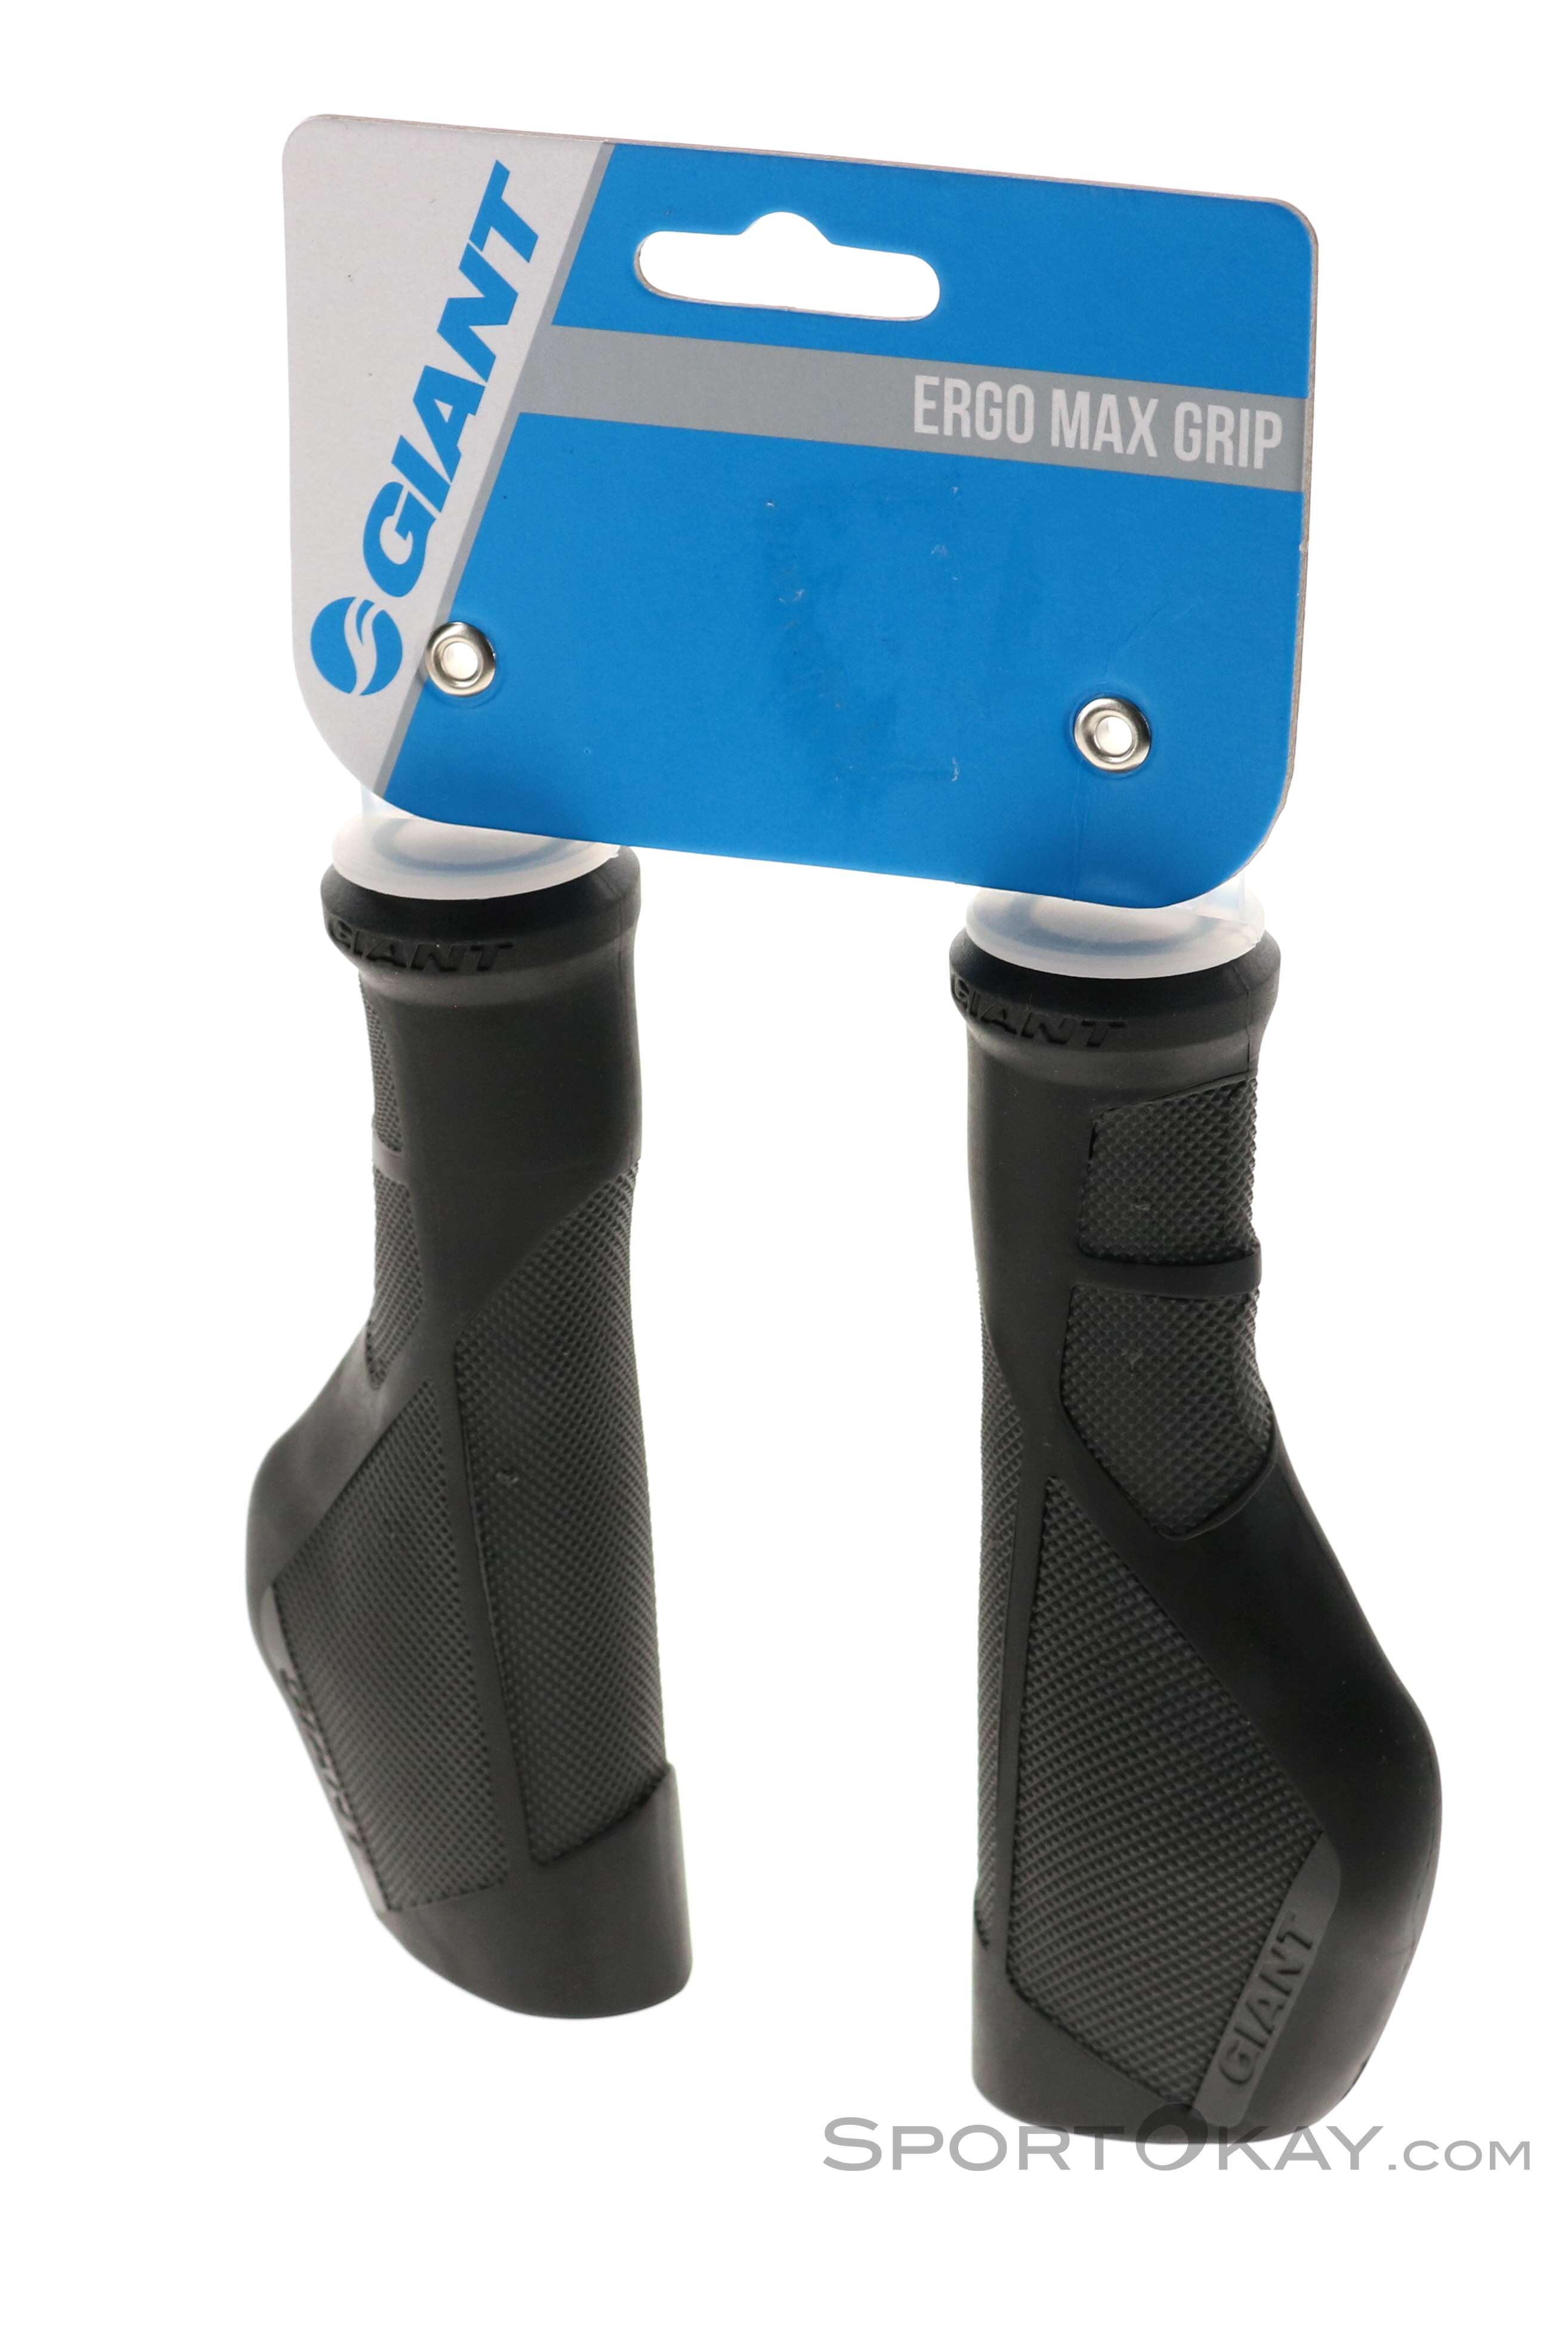 GIANT Ergo Max Lock-On - Poignées de vélo montagne (ergonomique